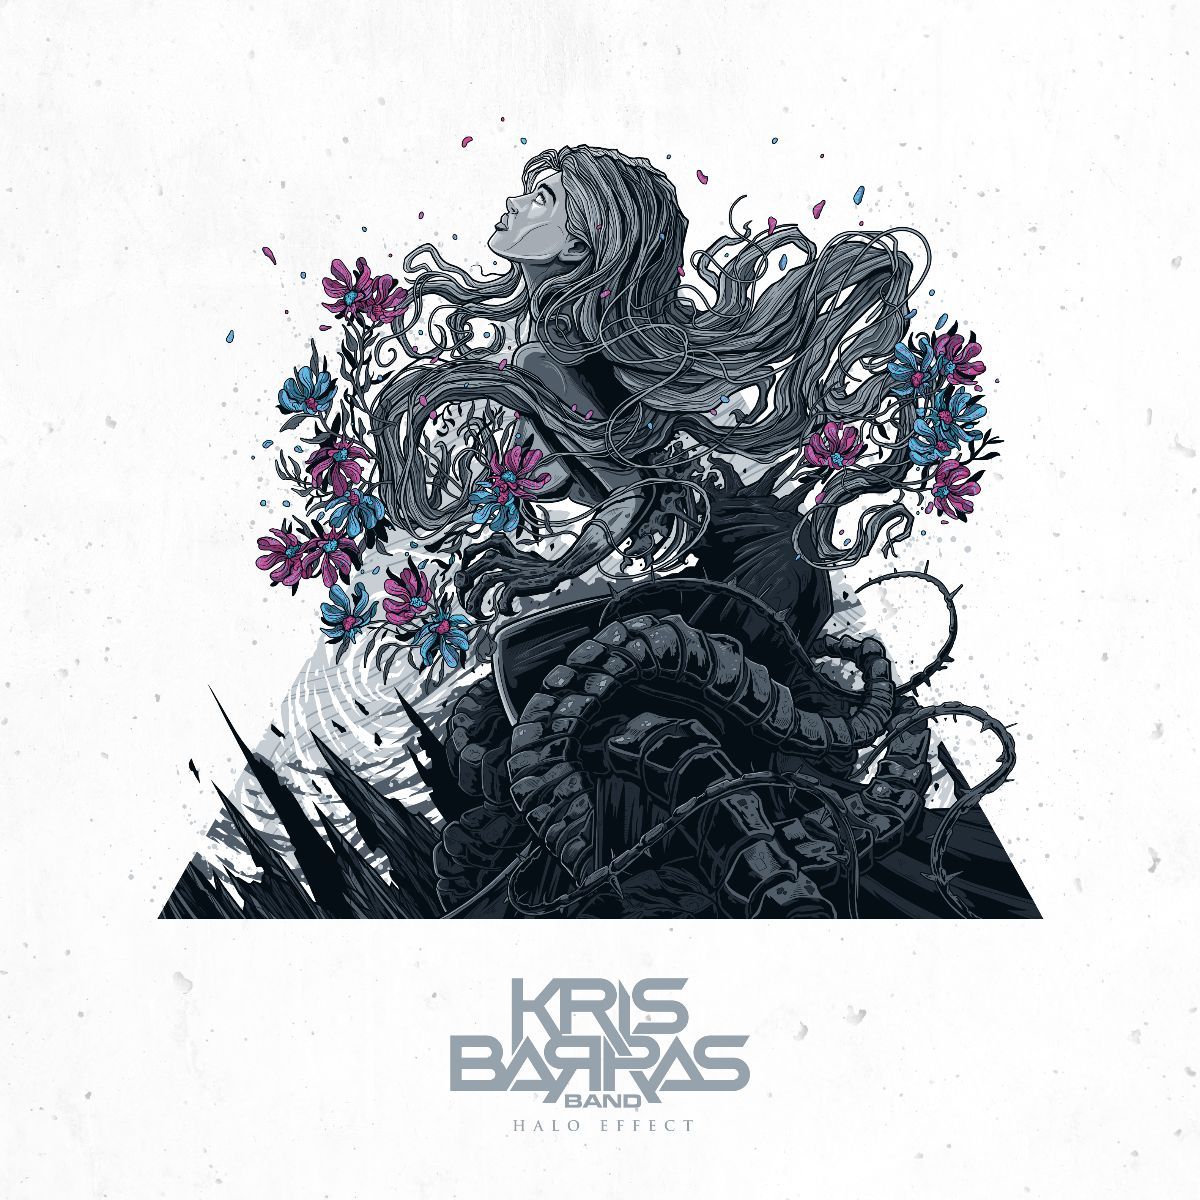 Kris Barras Band - "Halo Effect"